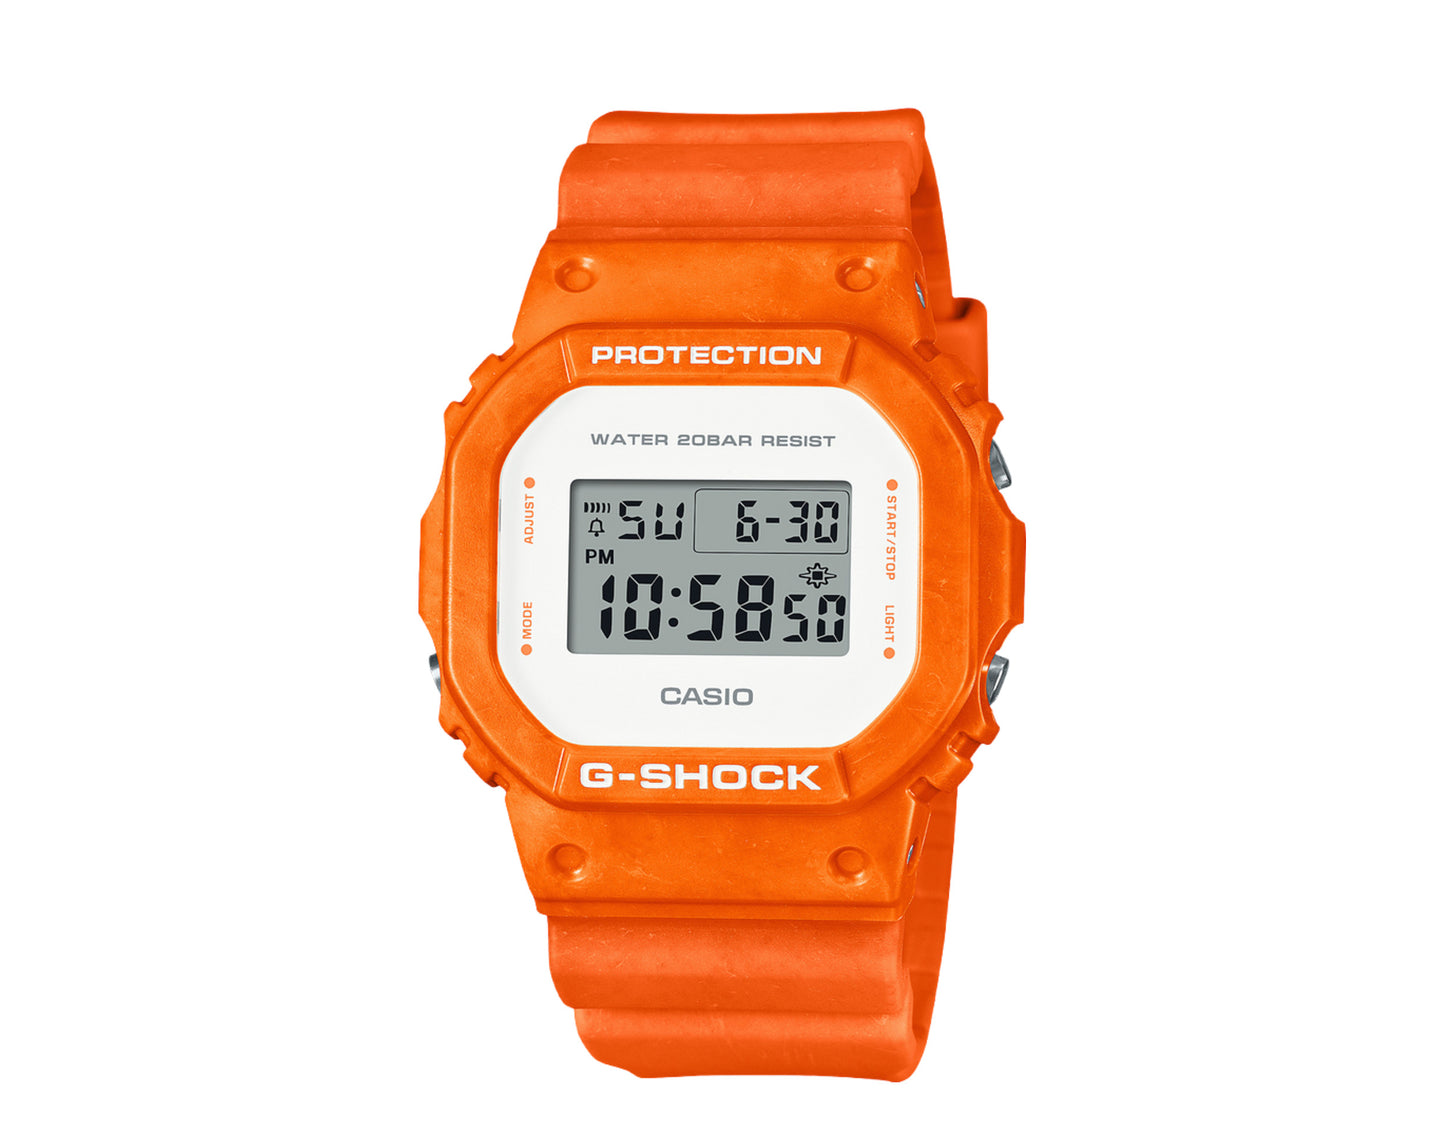 Casio G-Shock DW5600WS Digital Smokey Sea Resin Watch